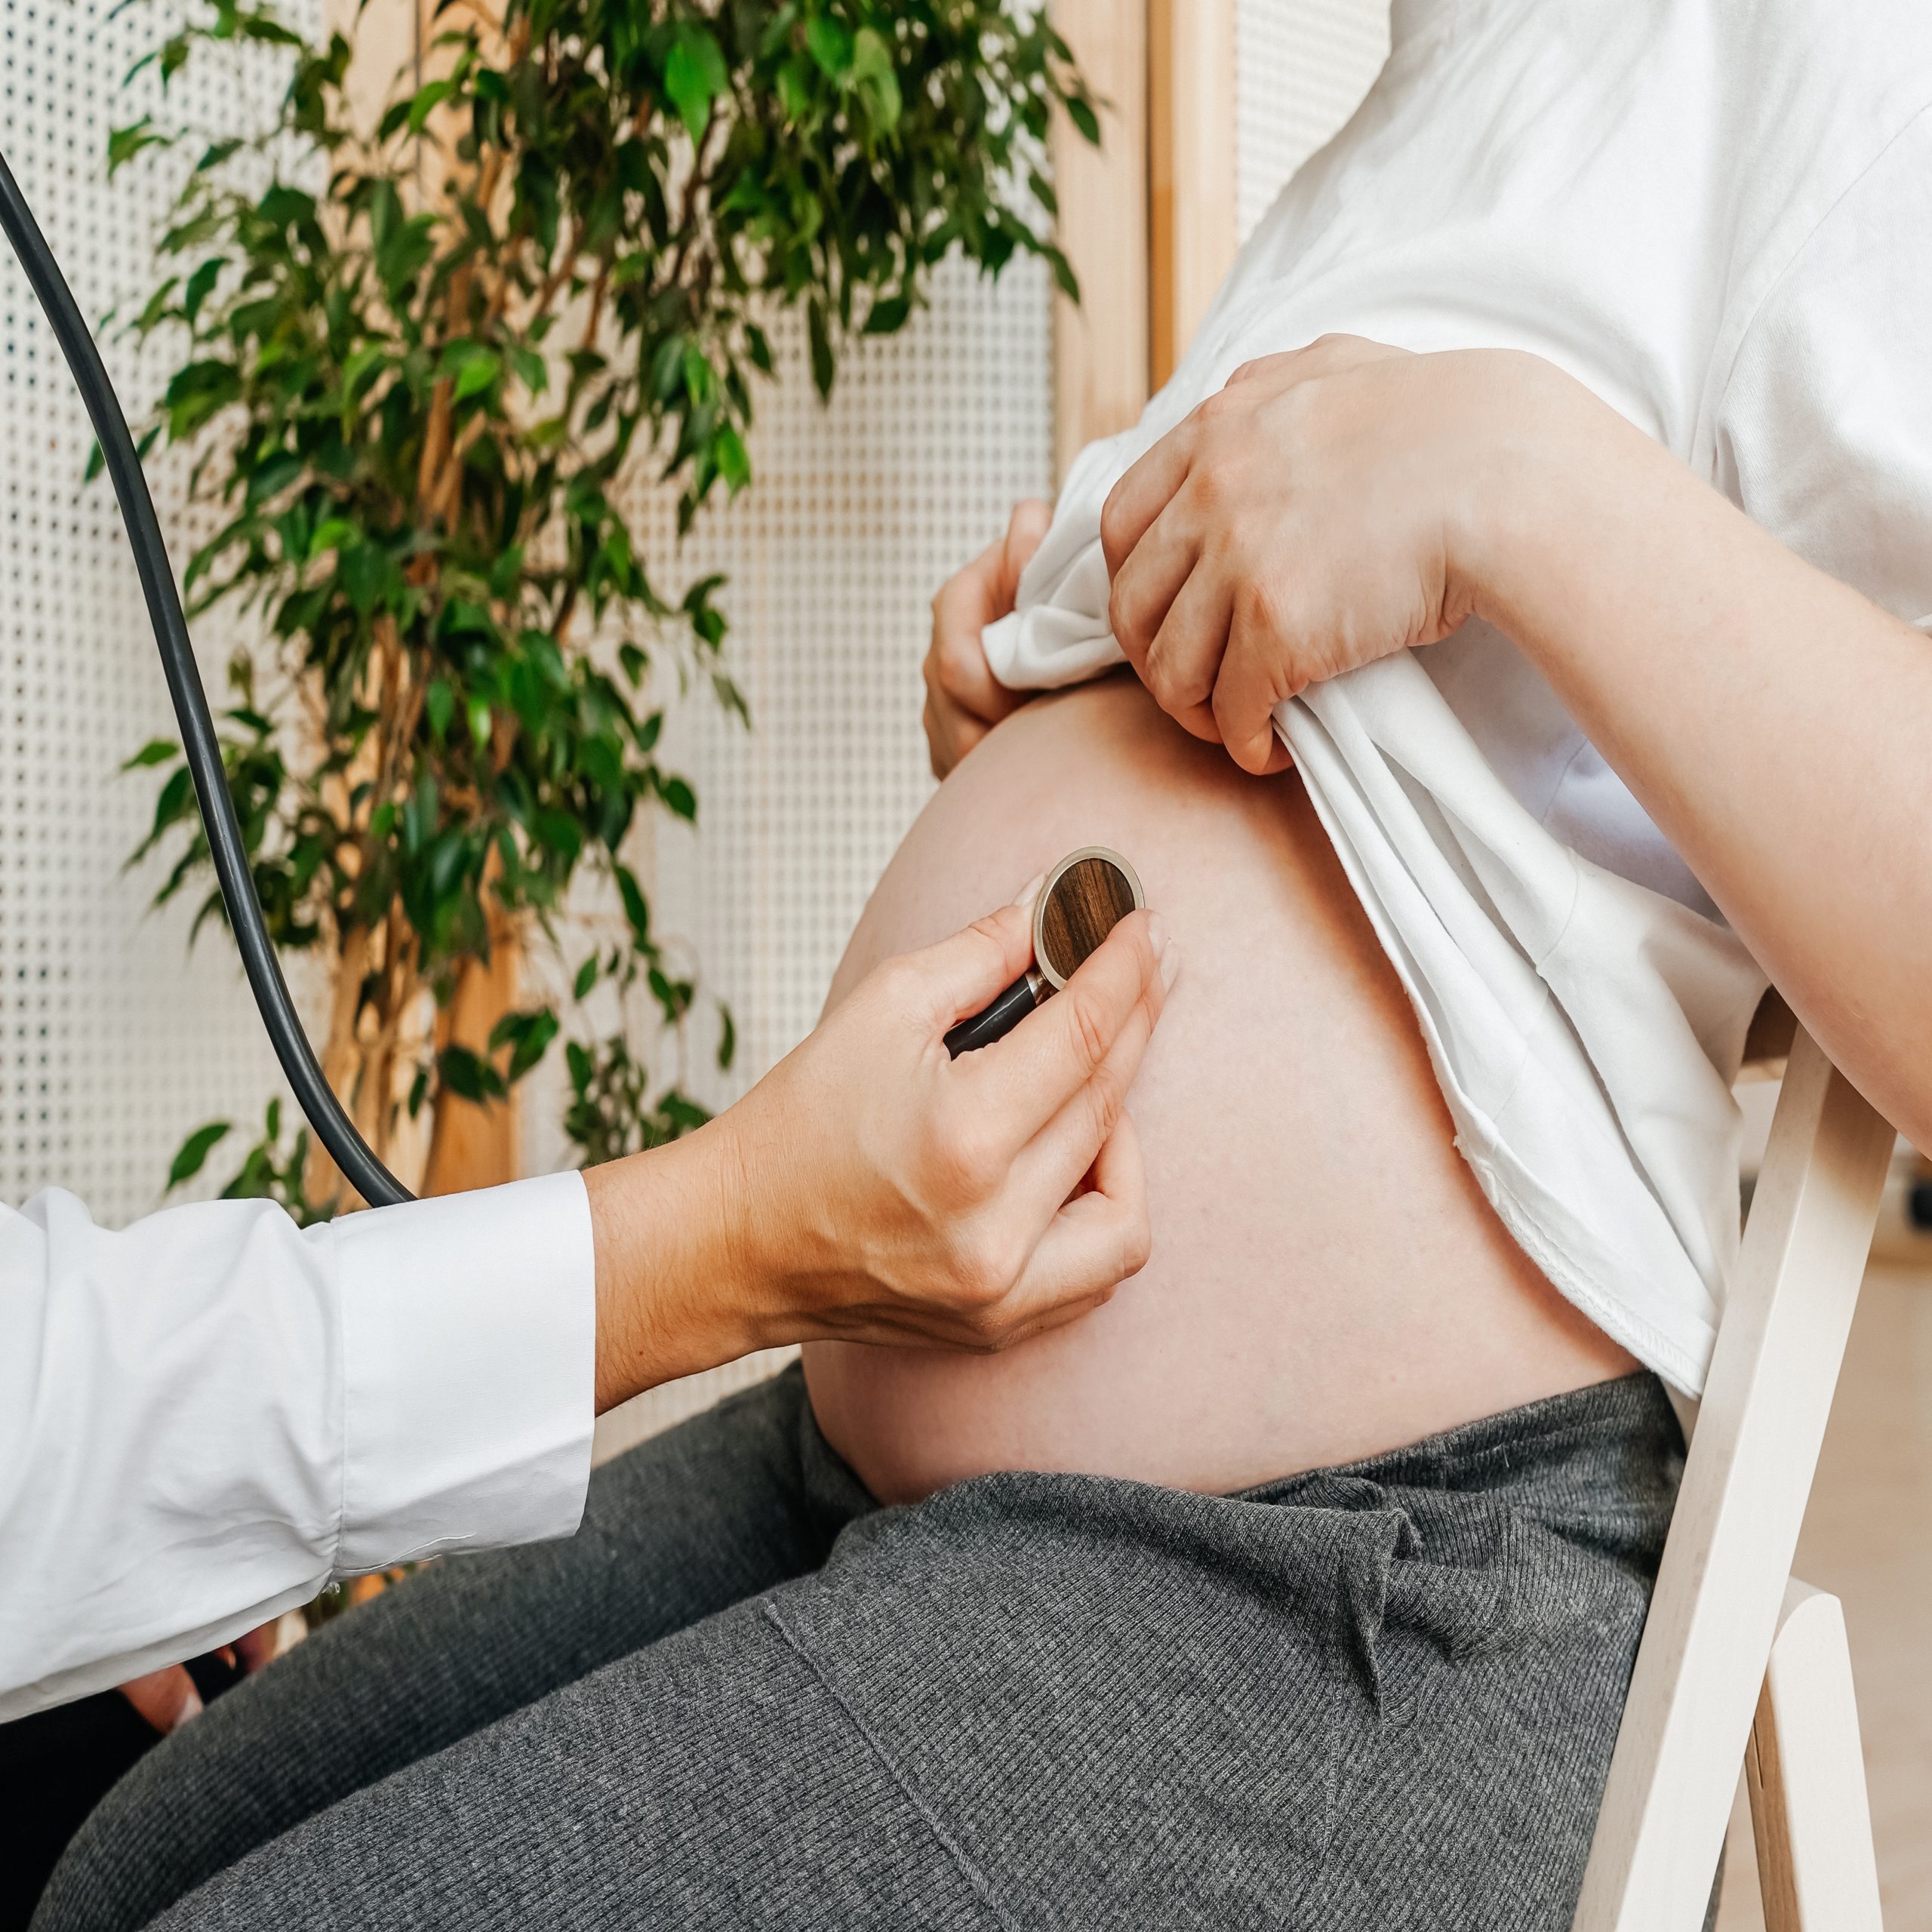 pregnant person at doctor's office getting pregnancy checkup - lgbtq birth provider